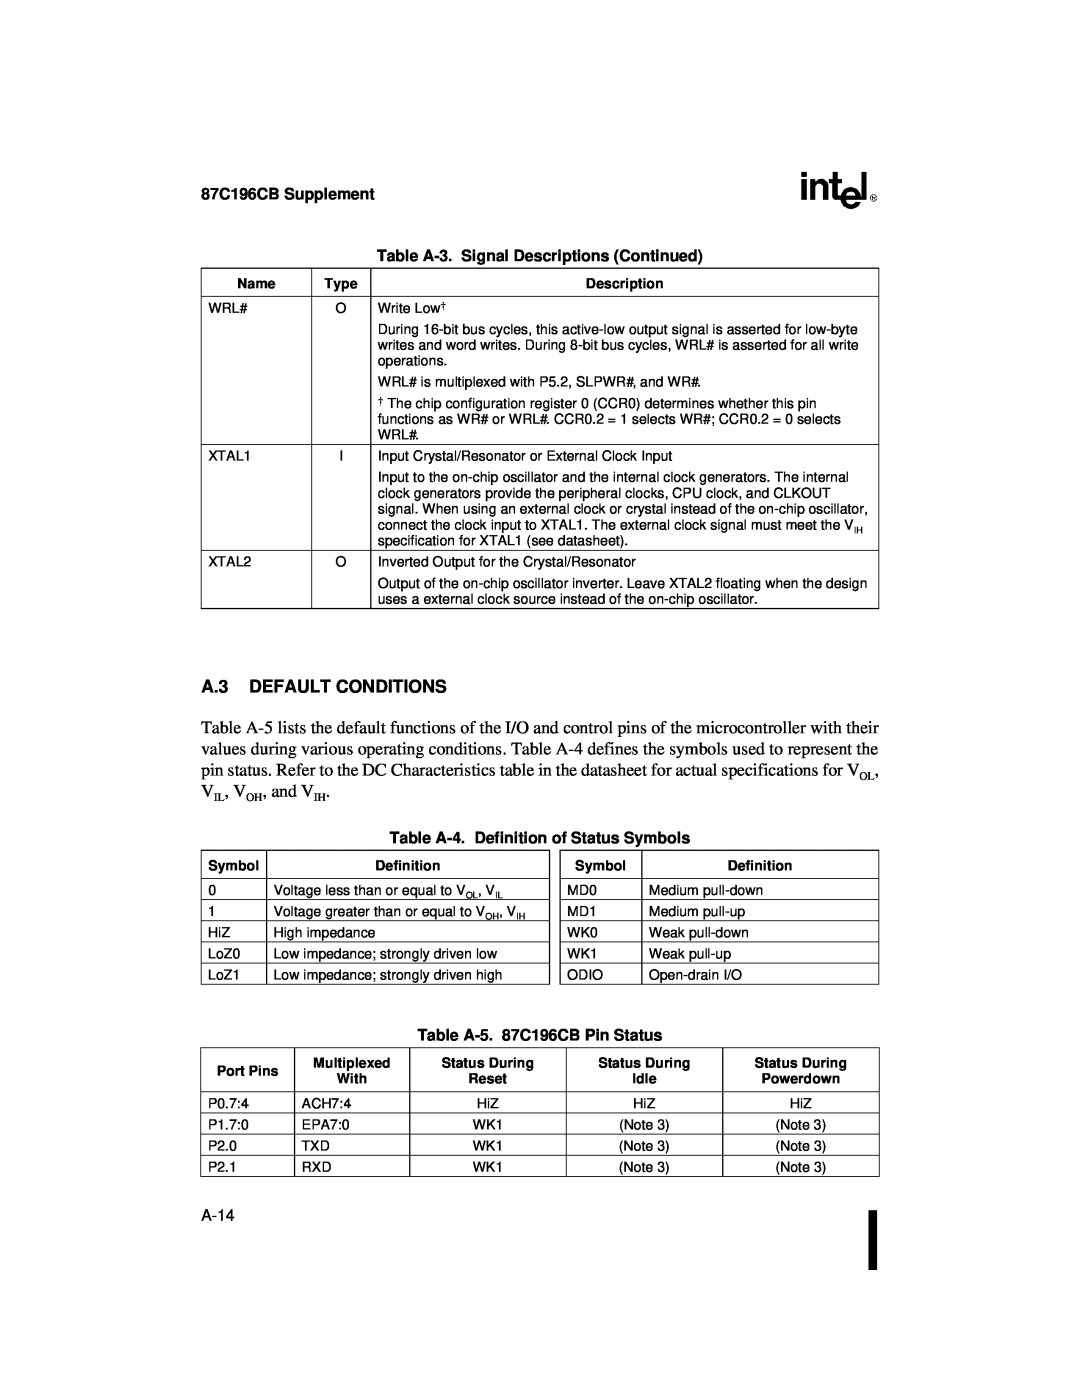 Intel 8XC196NT user manual A.3 DEFAULT CONDITIONS, 87C196CB Supplement, Table A-3. Signal Descriptions Continued 